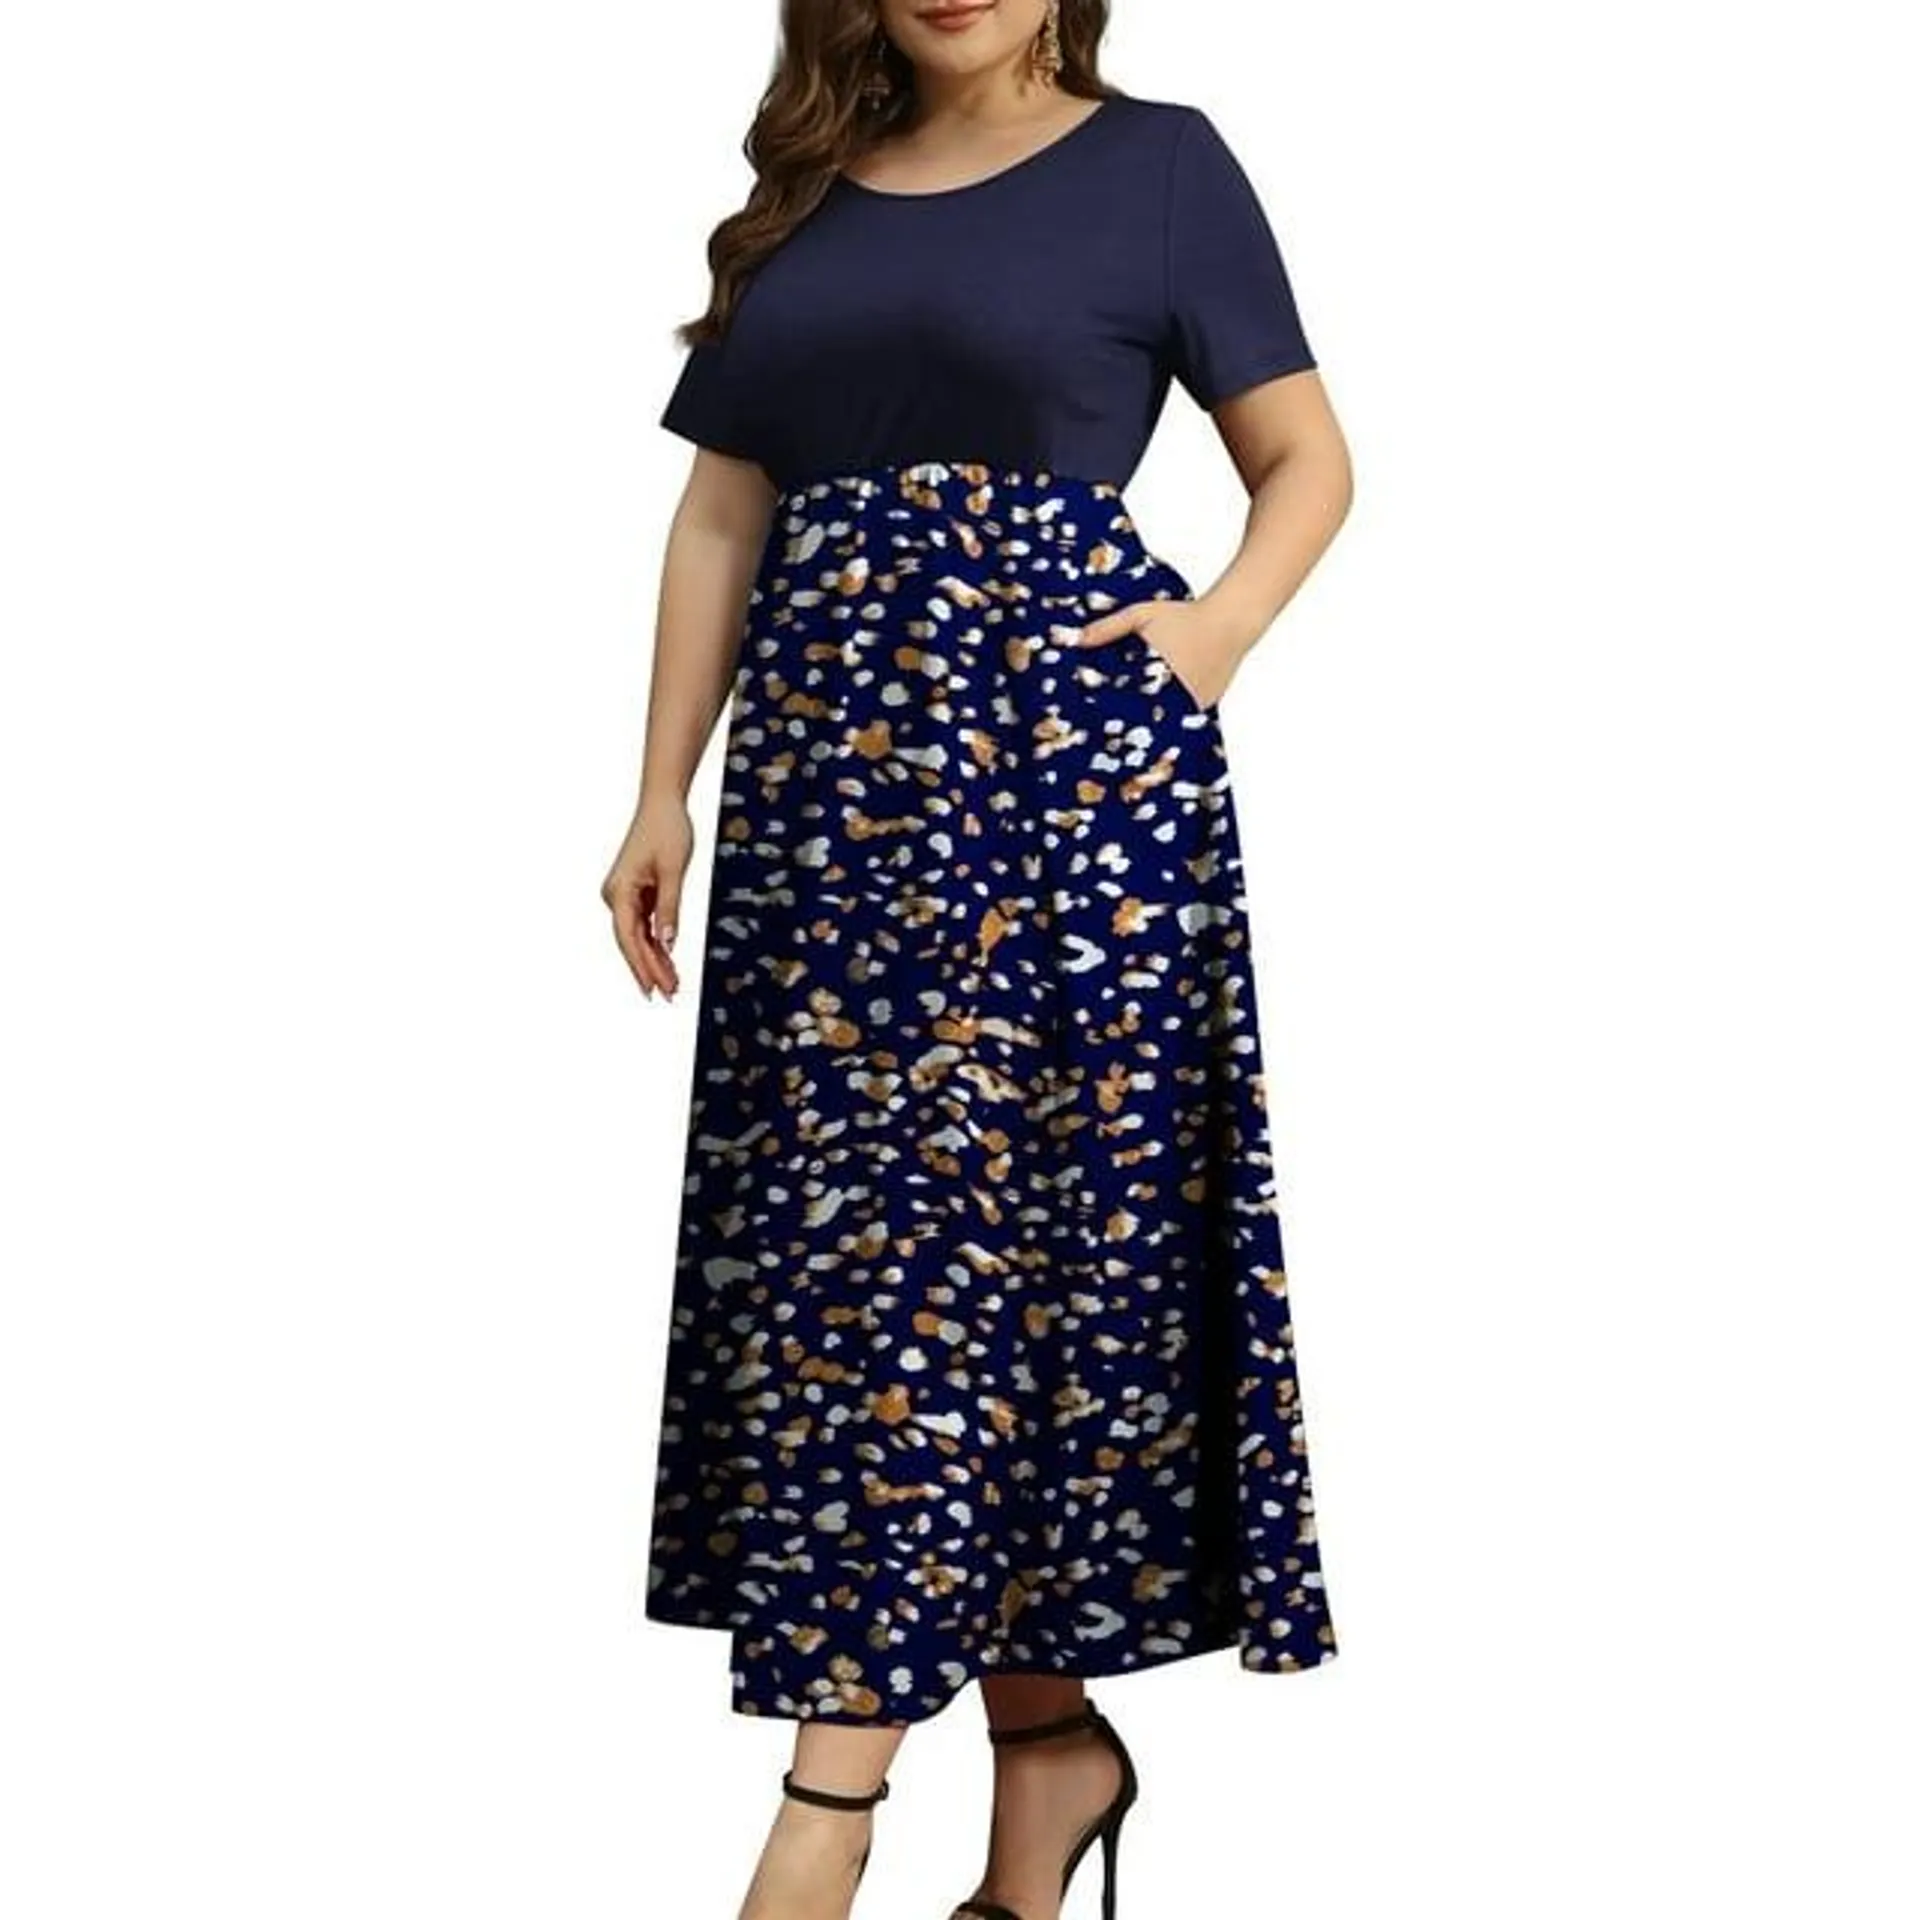 FOLUNSI Women Plus Size Dresses Short Sleeve Loose Ribbed Casual Long Maxi Dresses with Pockets M-4X